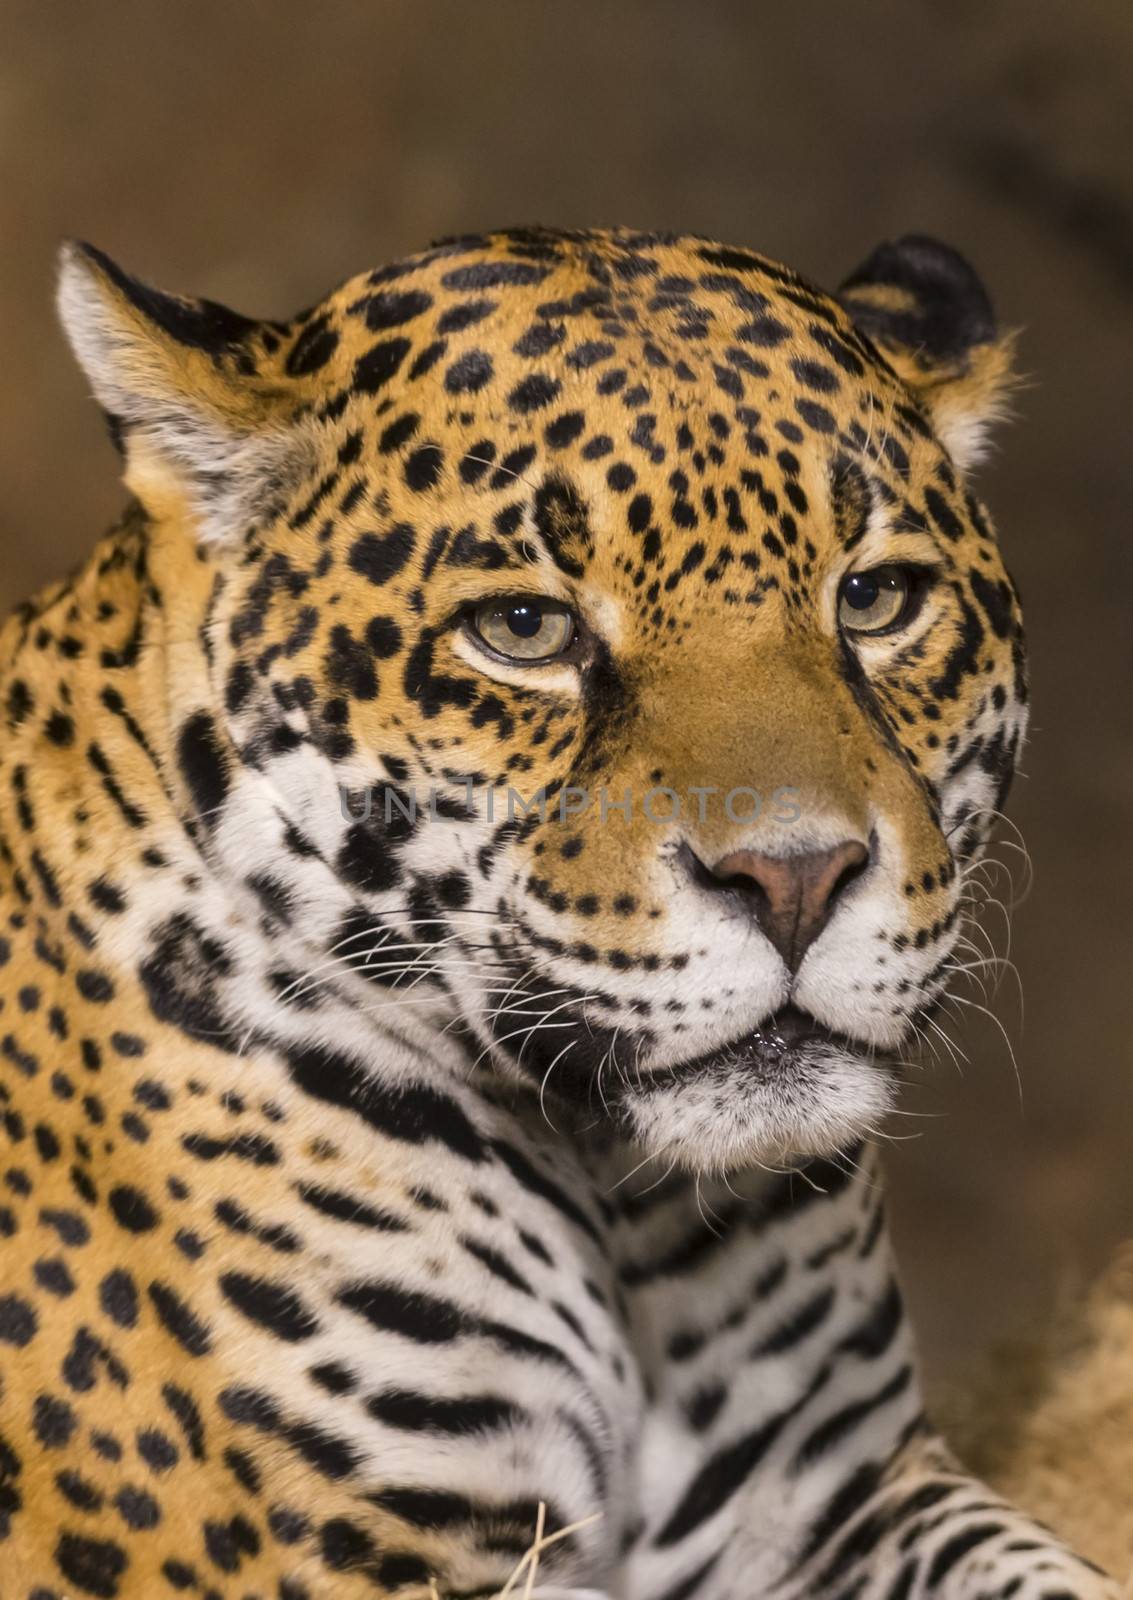 Adult female jaguar - looking towards the camera